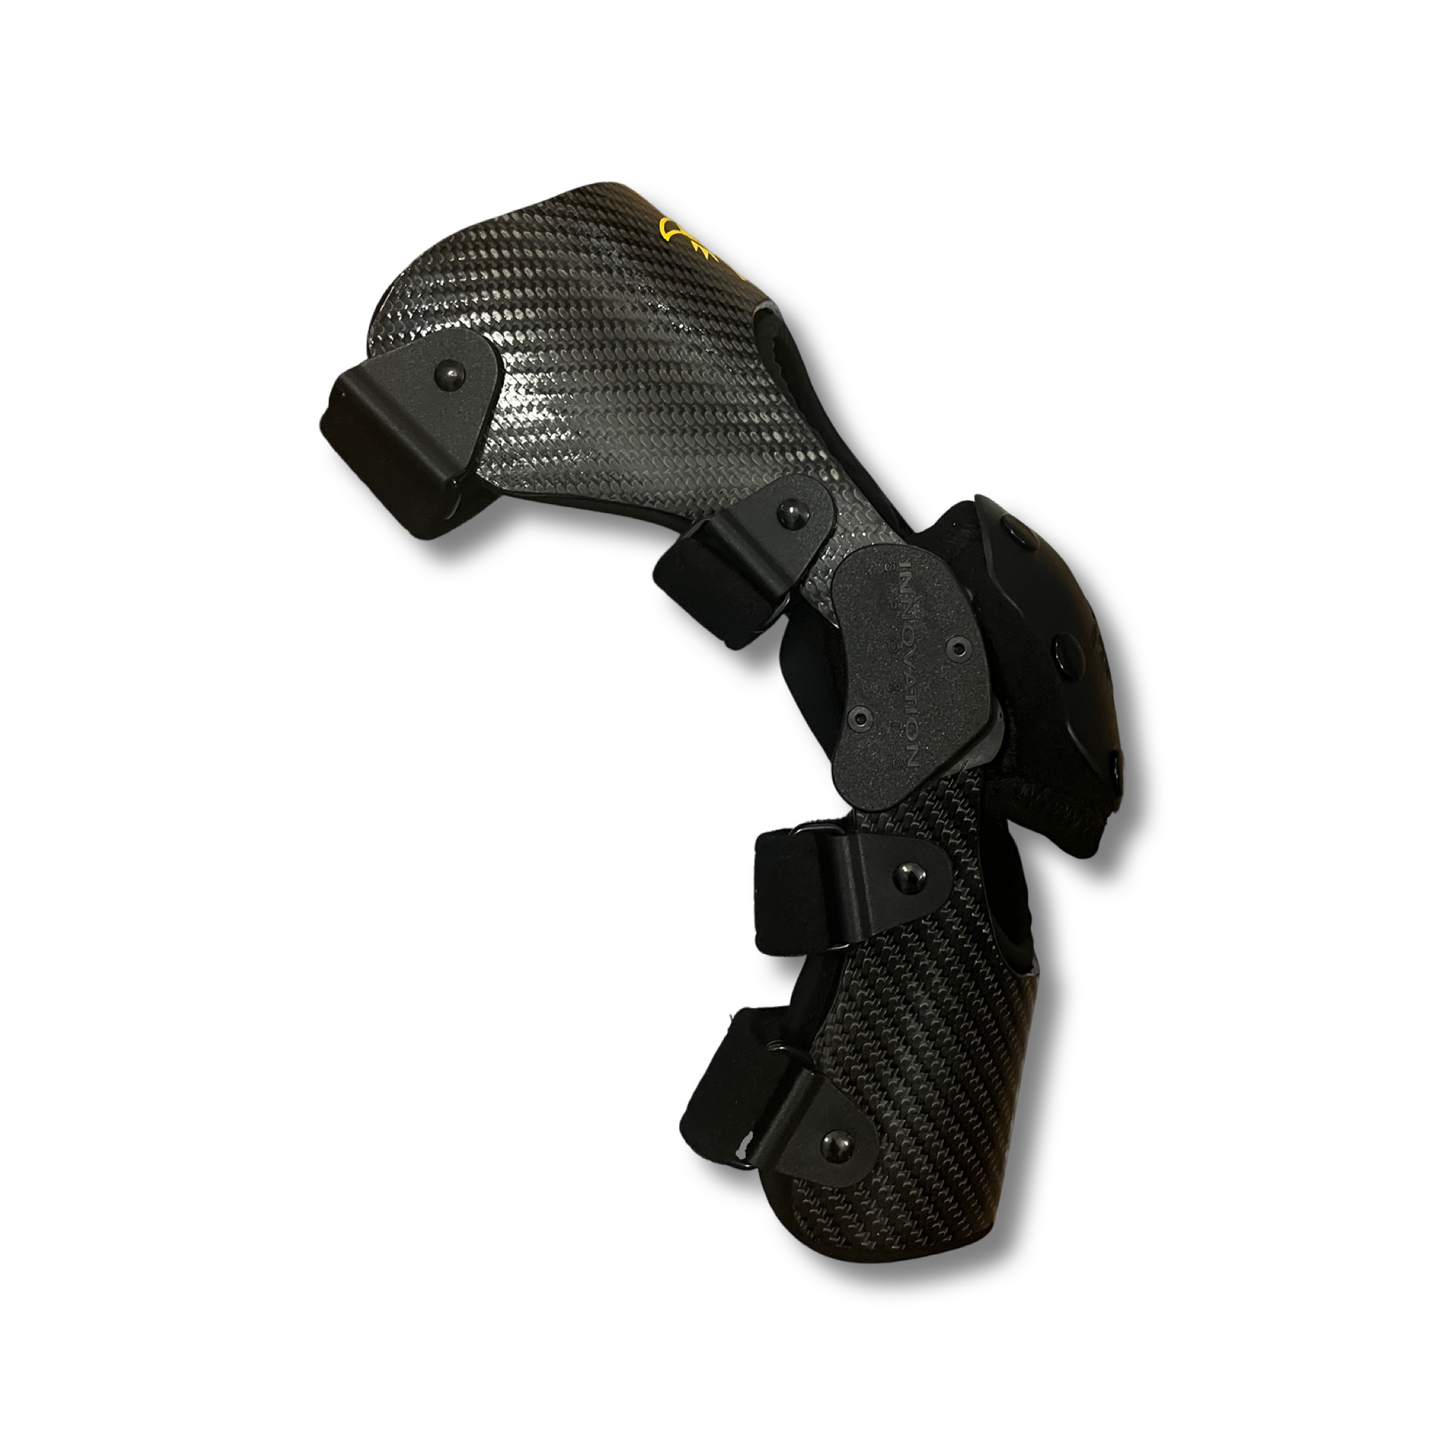 C180 Rocket knee brace Side Image with patella guard